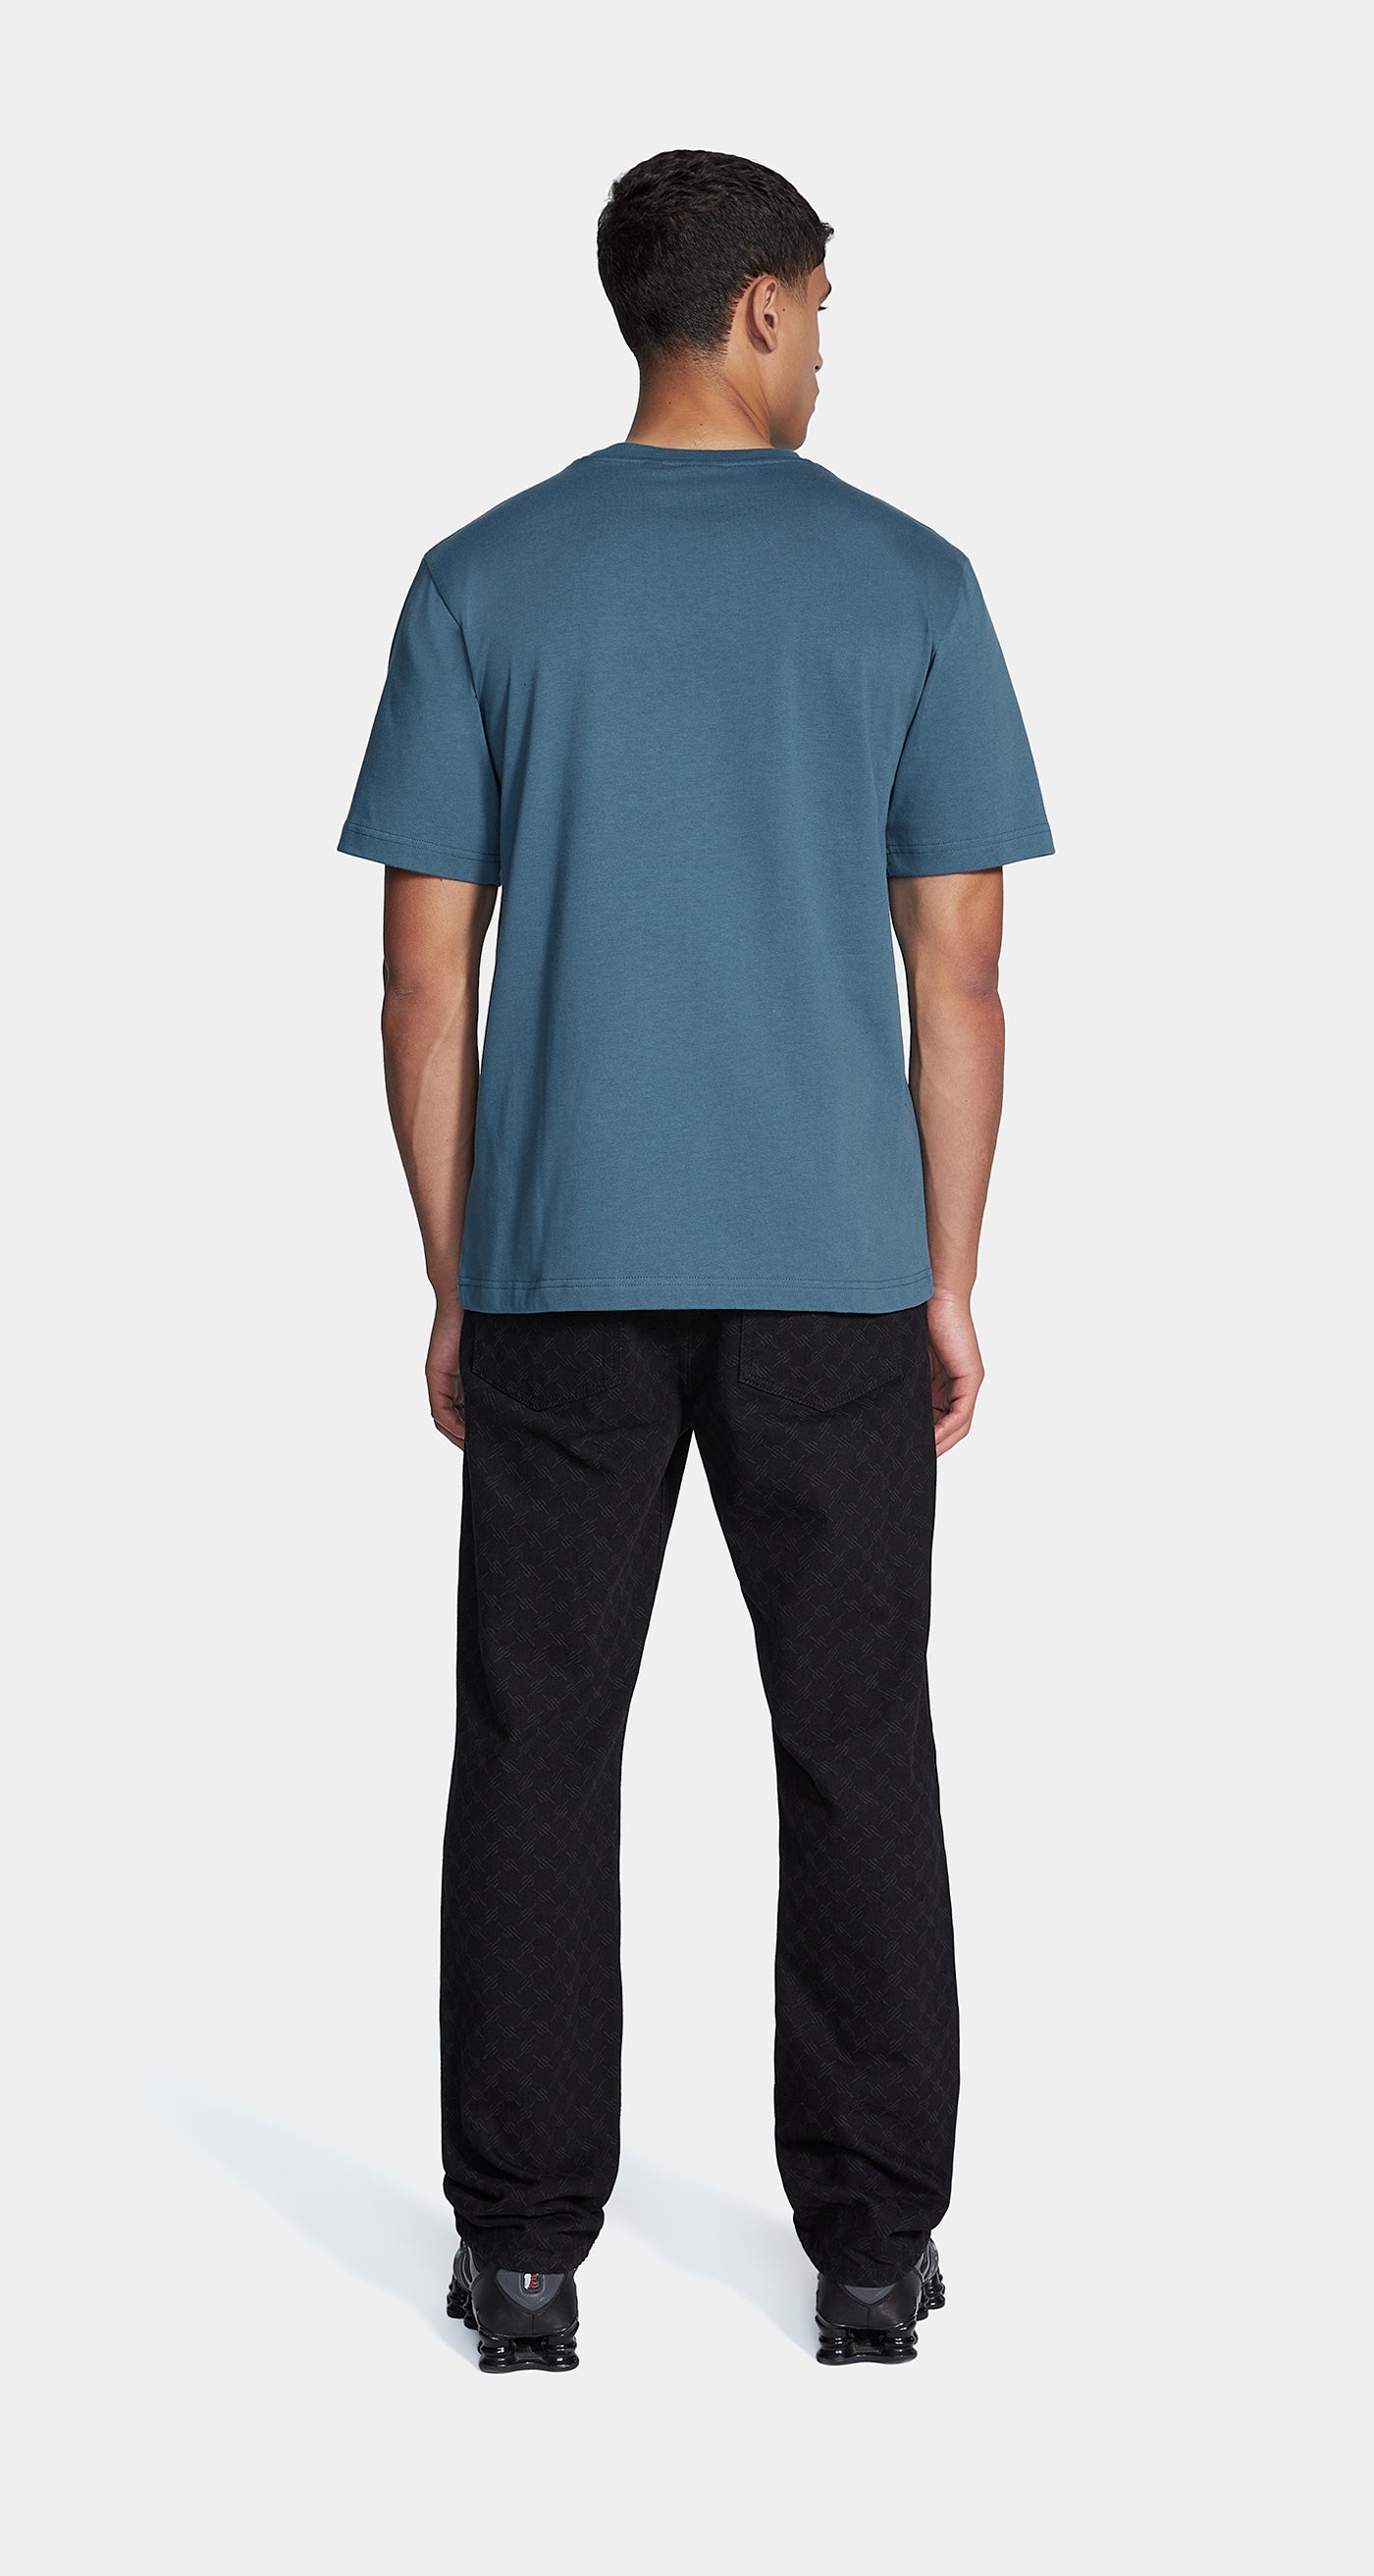 DP - Teal Blue Hobal T-Shirt - Men - Rear